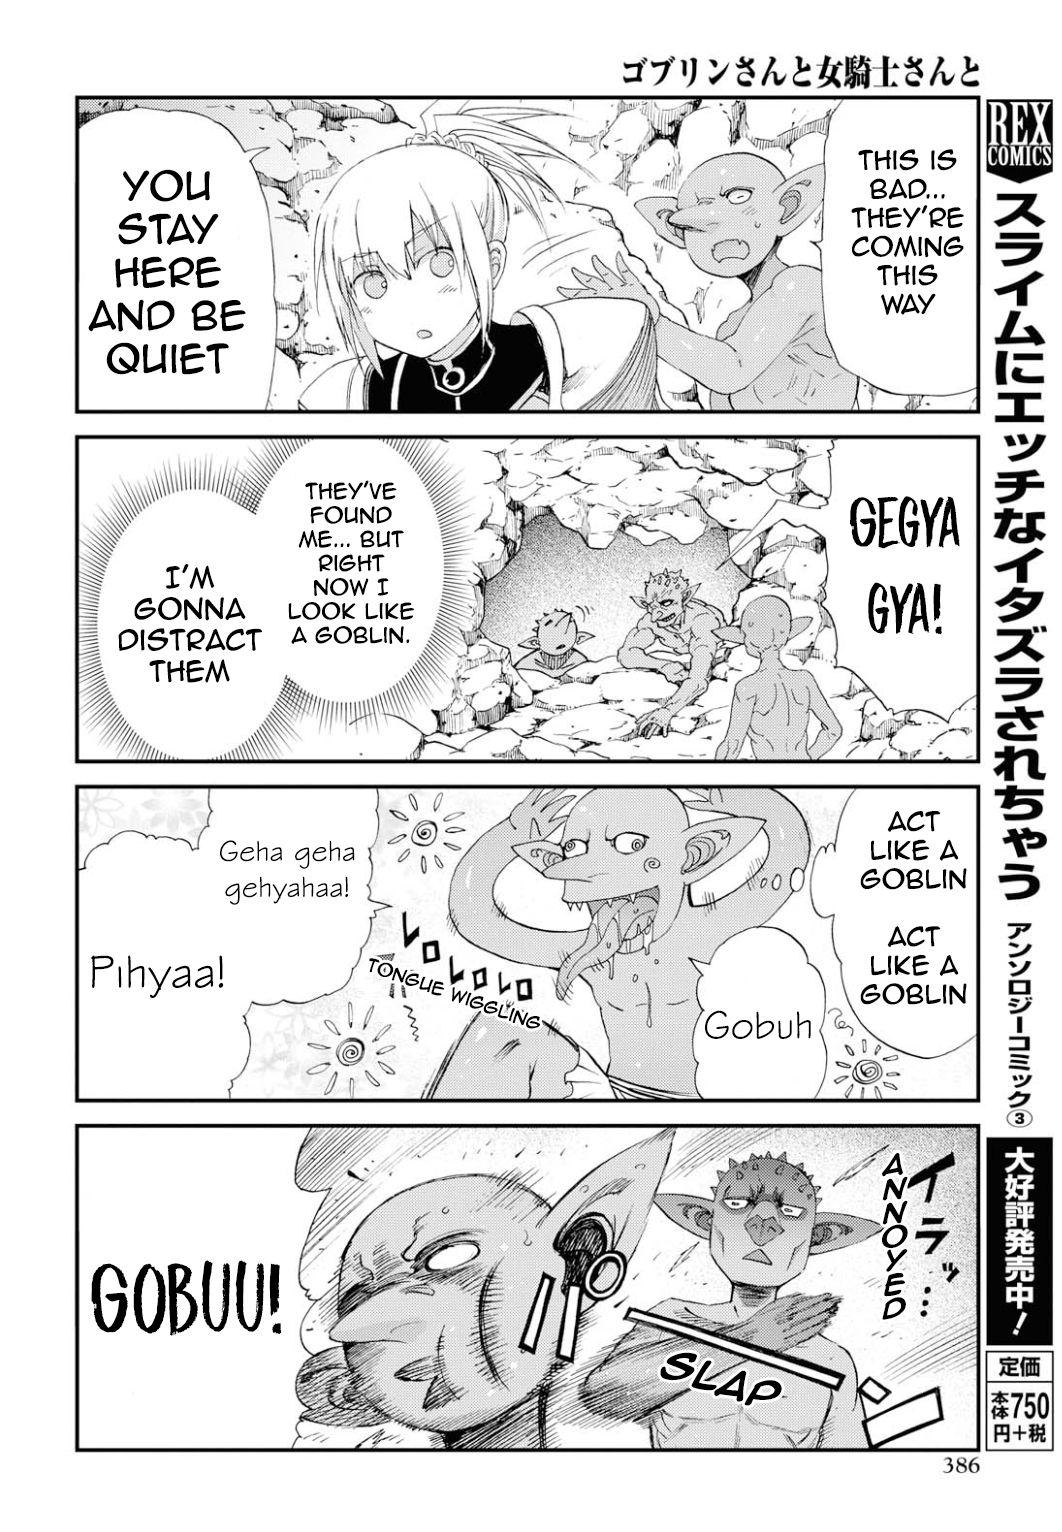 Goblin-san and Female Knight-san 5